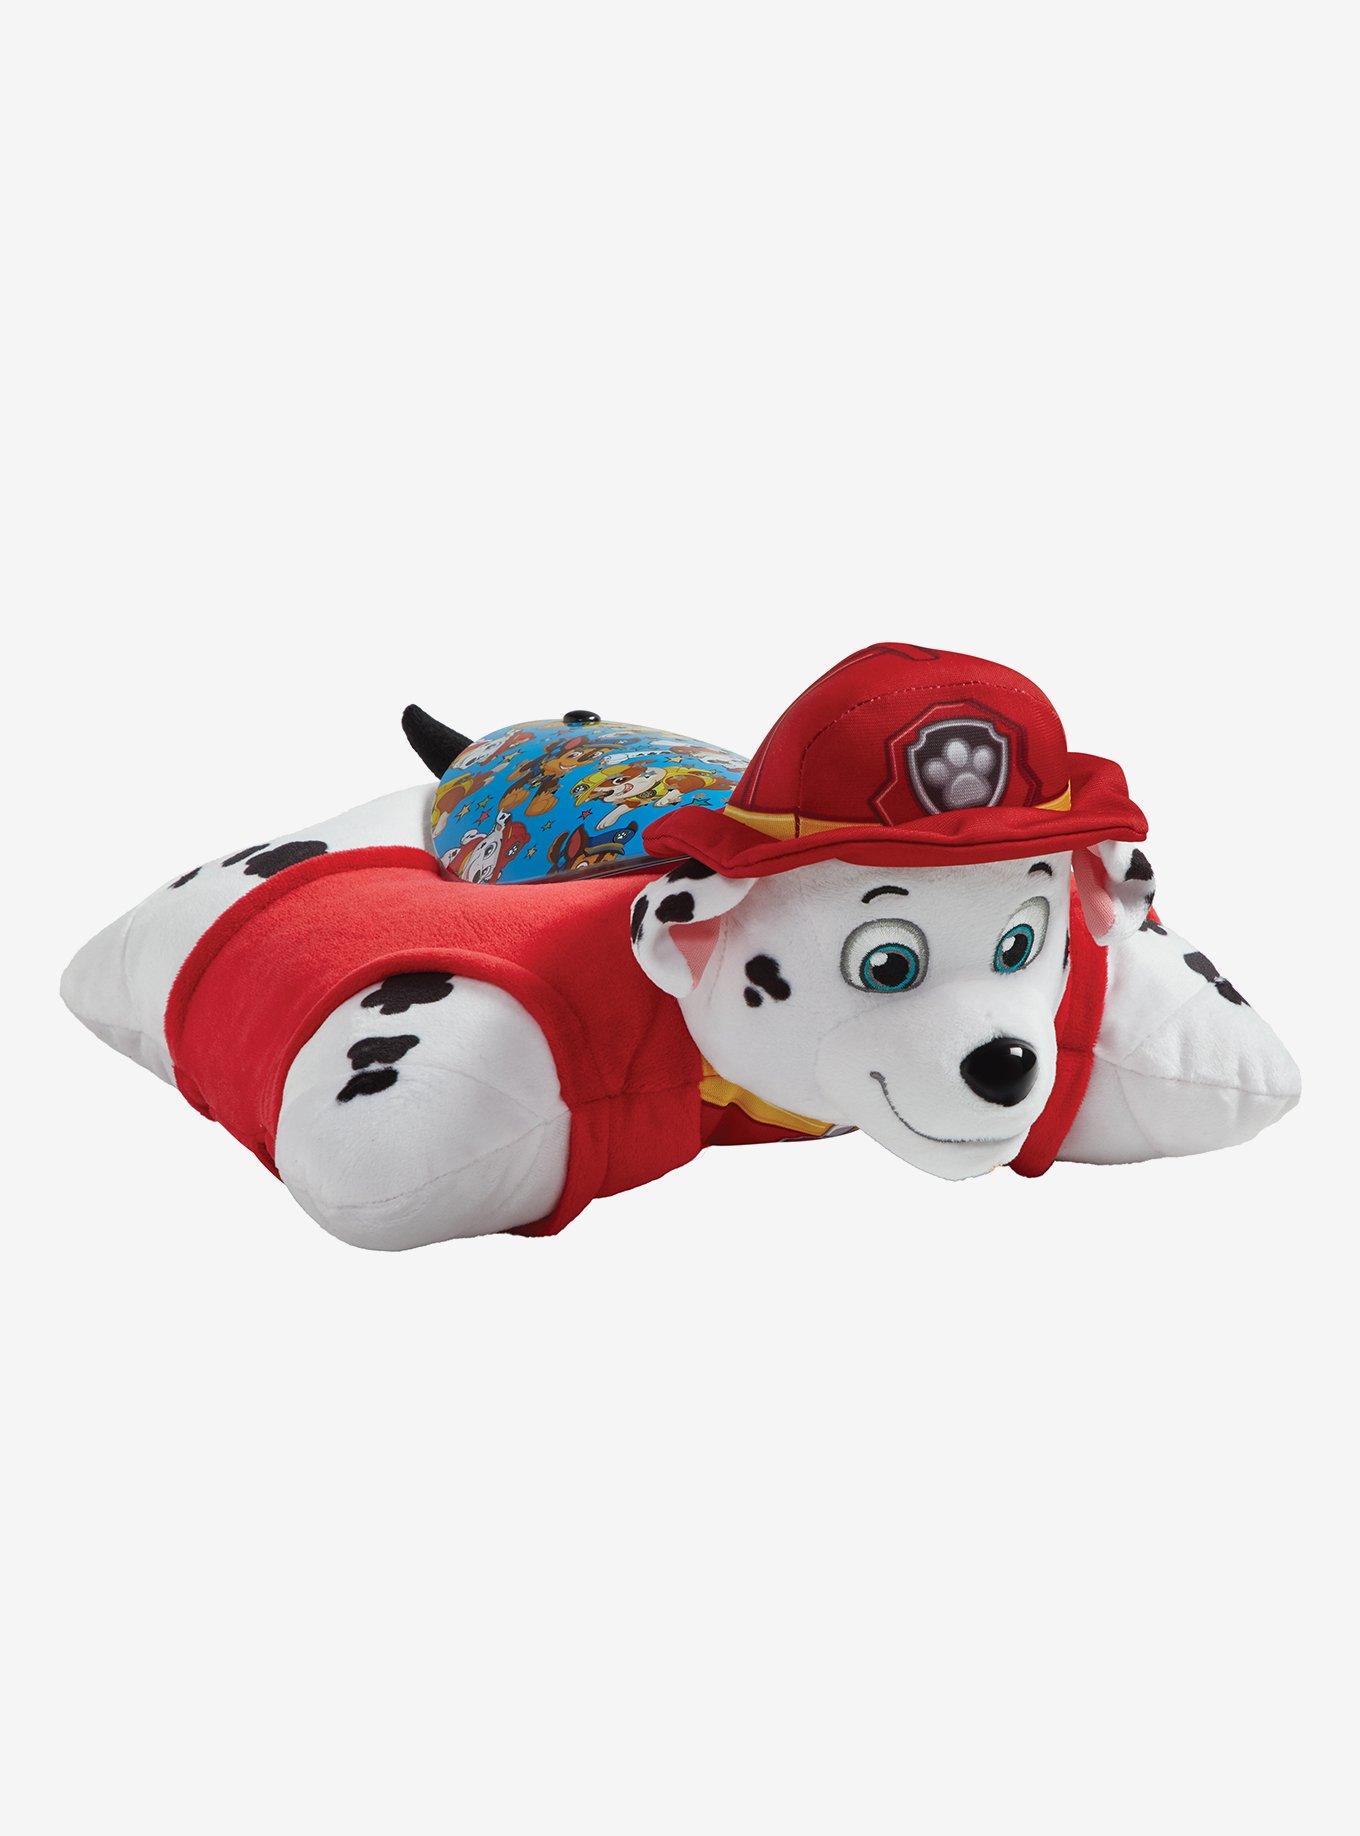 Nickelodeon Paw Patrol Marshall Sleeptime Lites Pillow Pets Plush Toy, , alternate